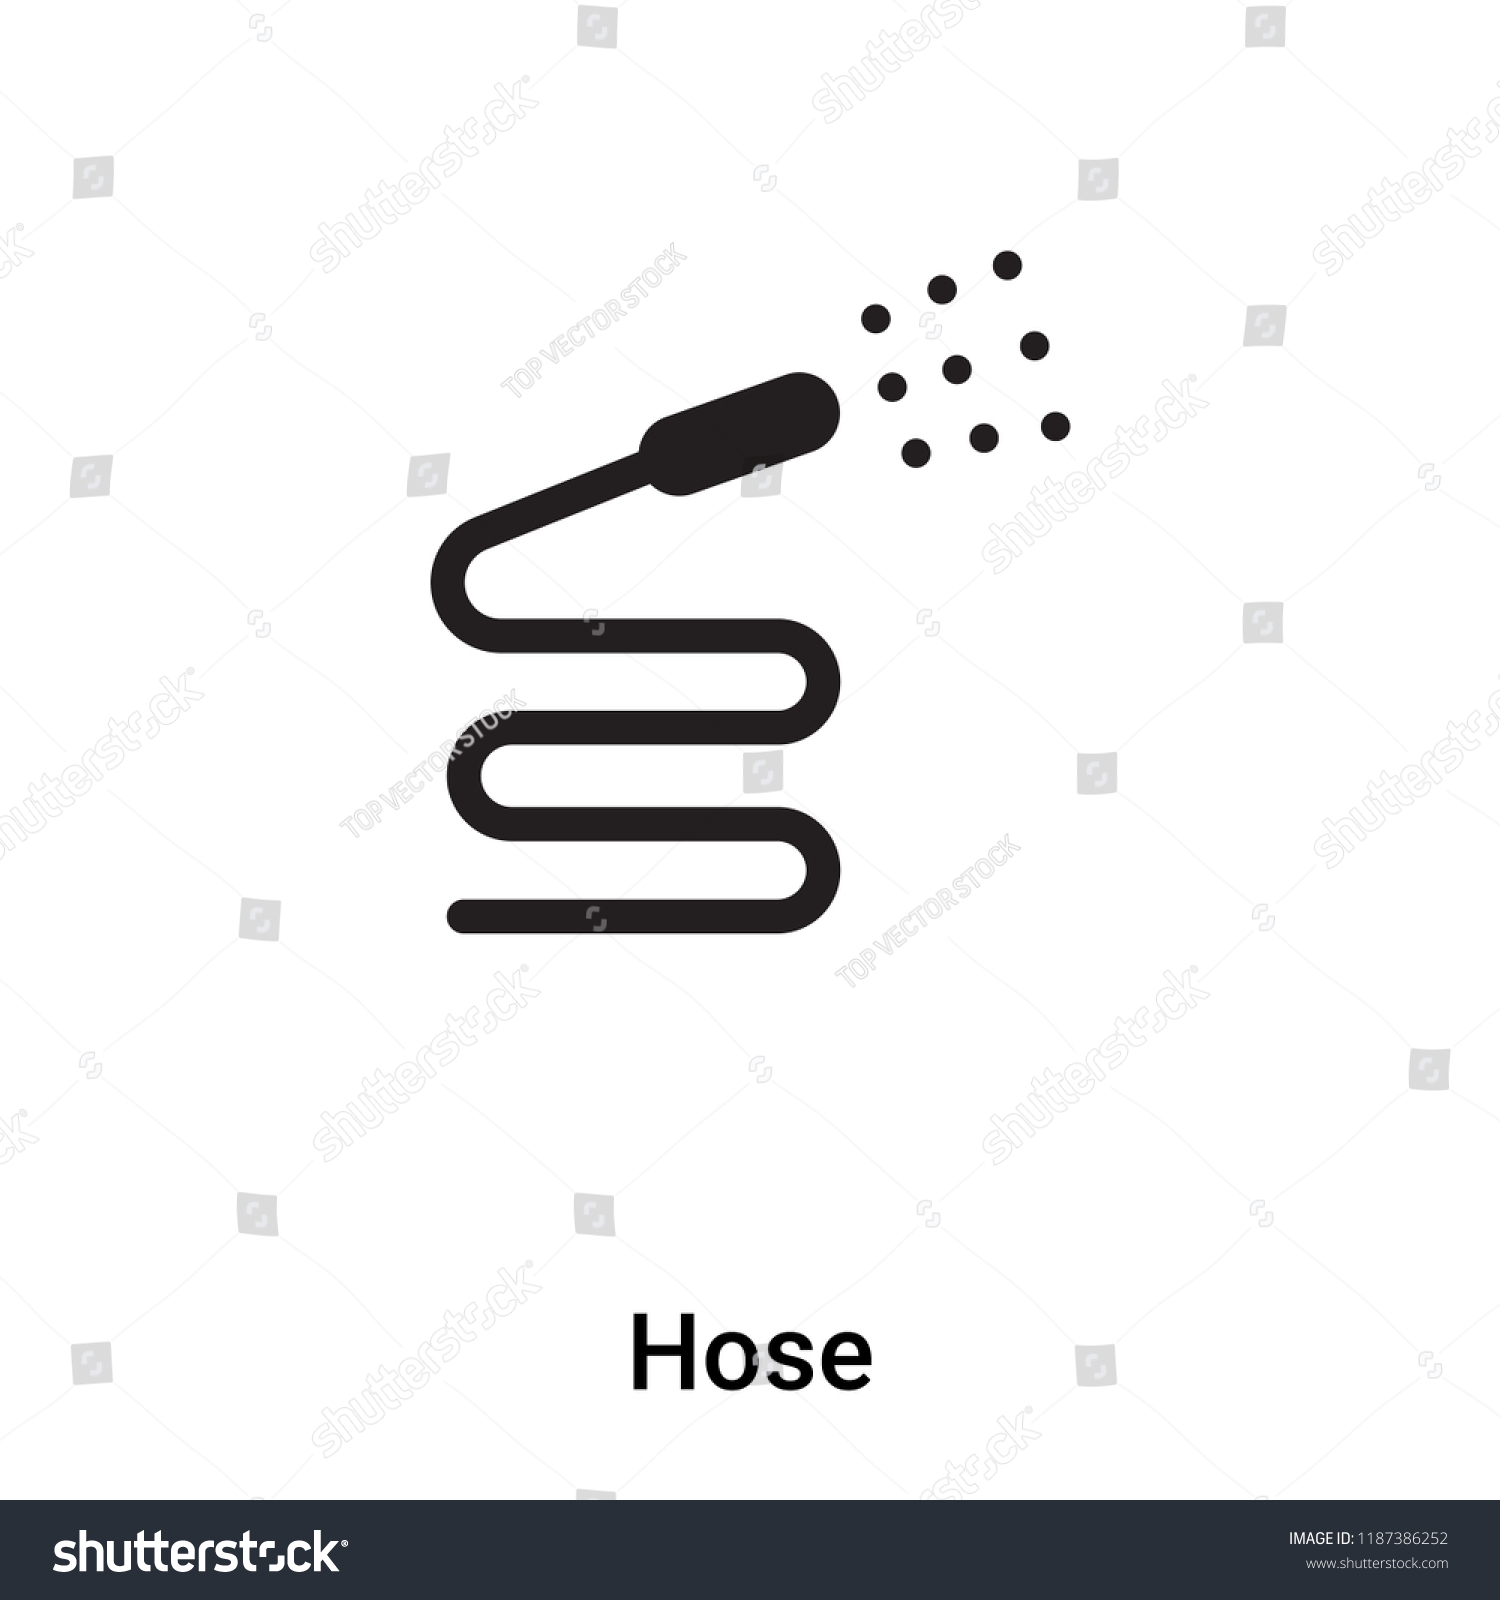 SVG of Hose icon vector isolated on white background, logo concept of Hose sign on transparent background, filled black symbol svg